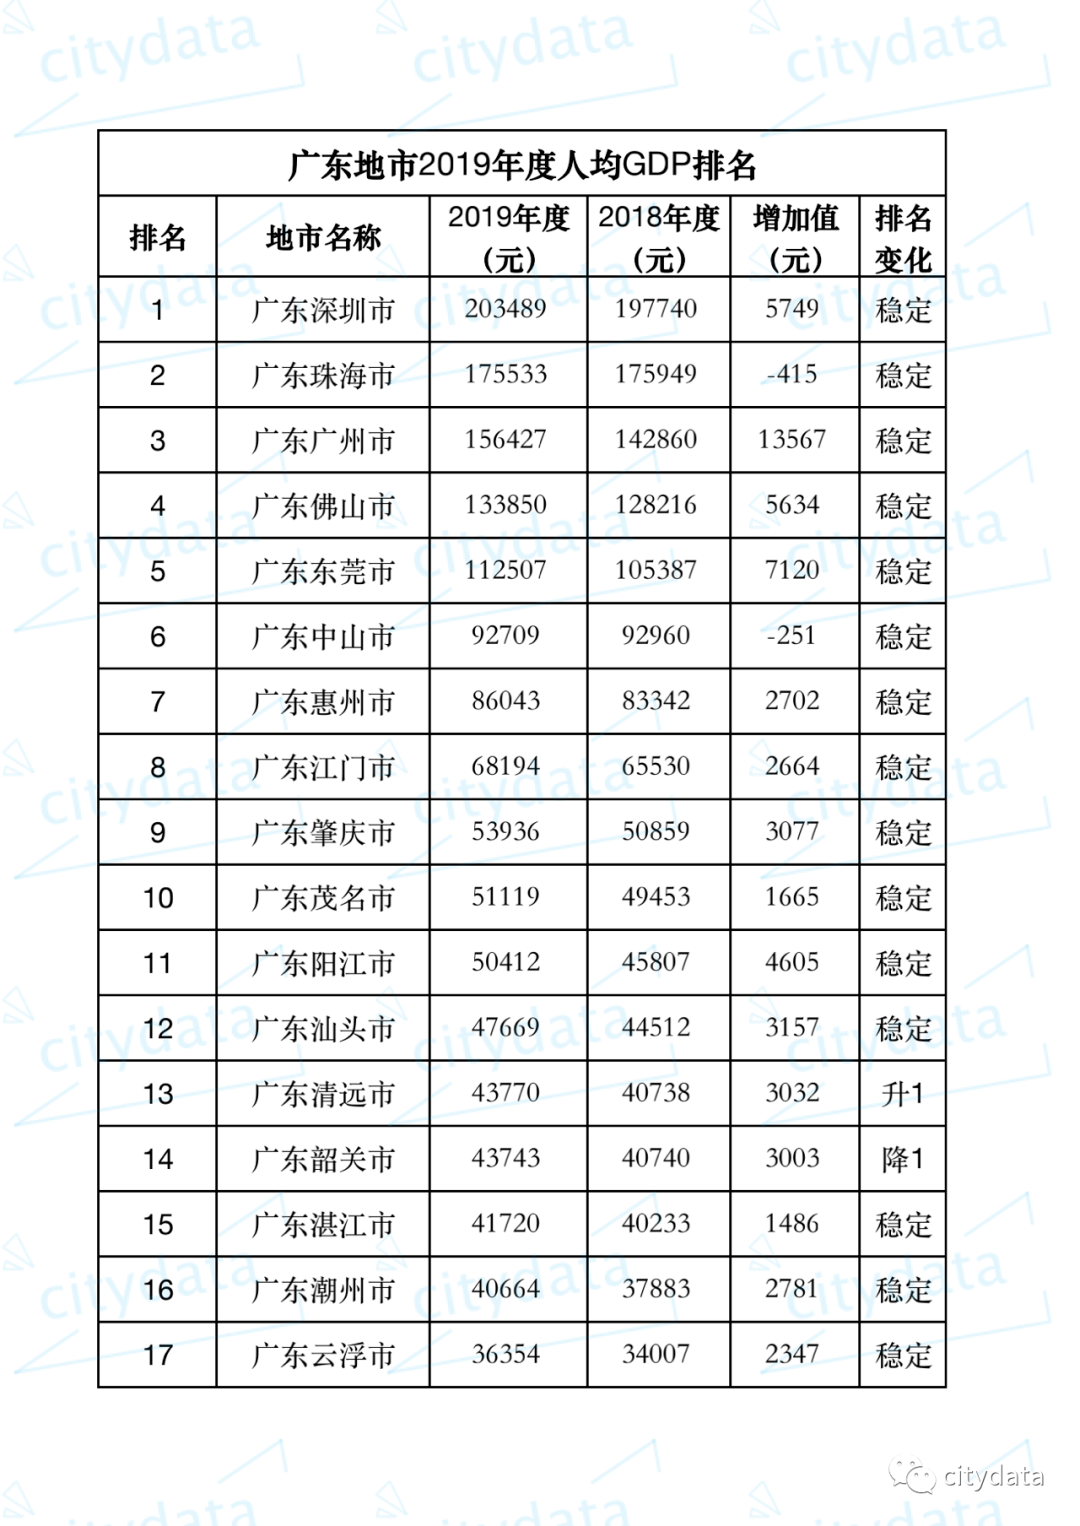 gdp2019排名_漳州市各区GDP排名2019年排行榜(完整版)